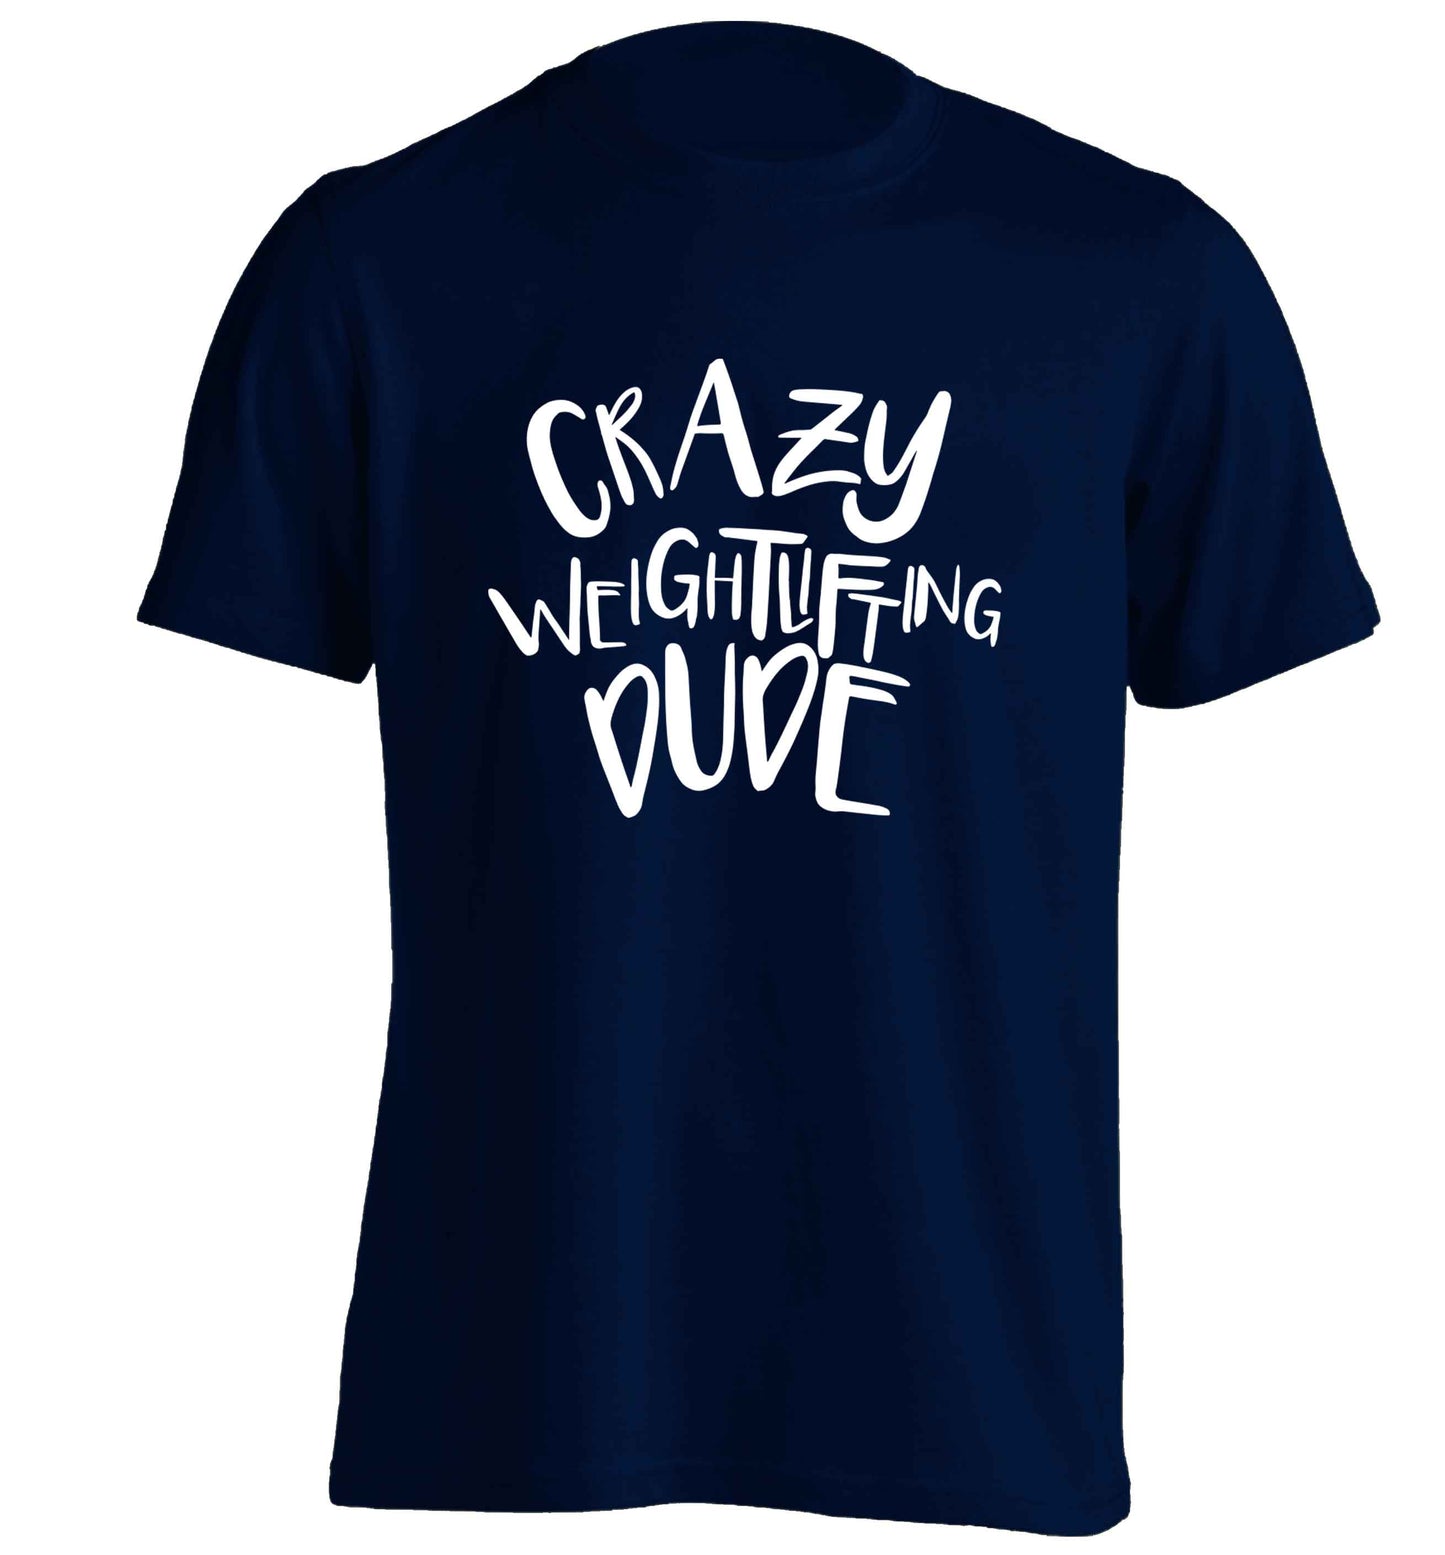 Crazy weightlifting dude adults unisex navy Tshirt 2XL